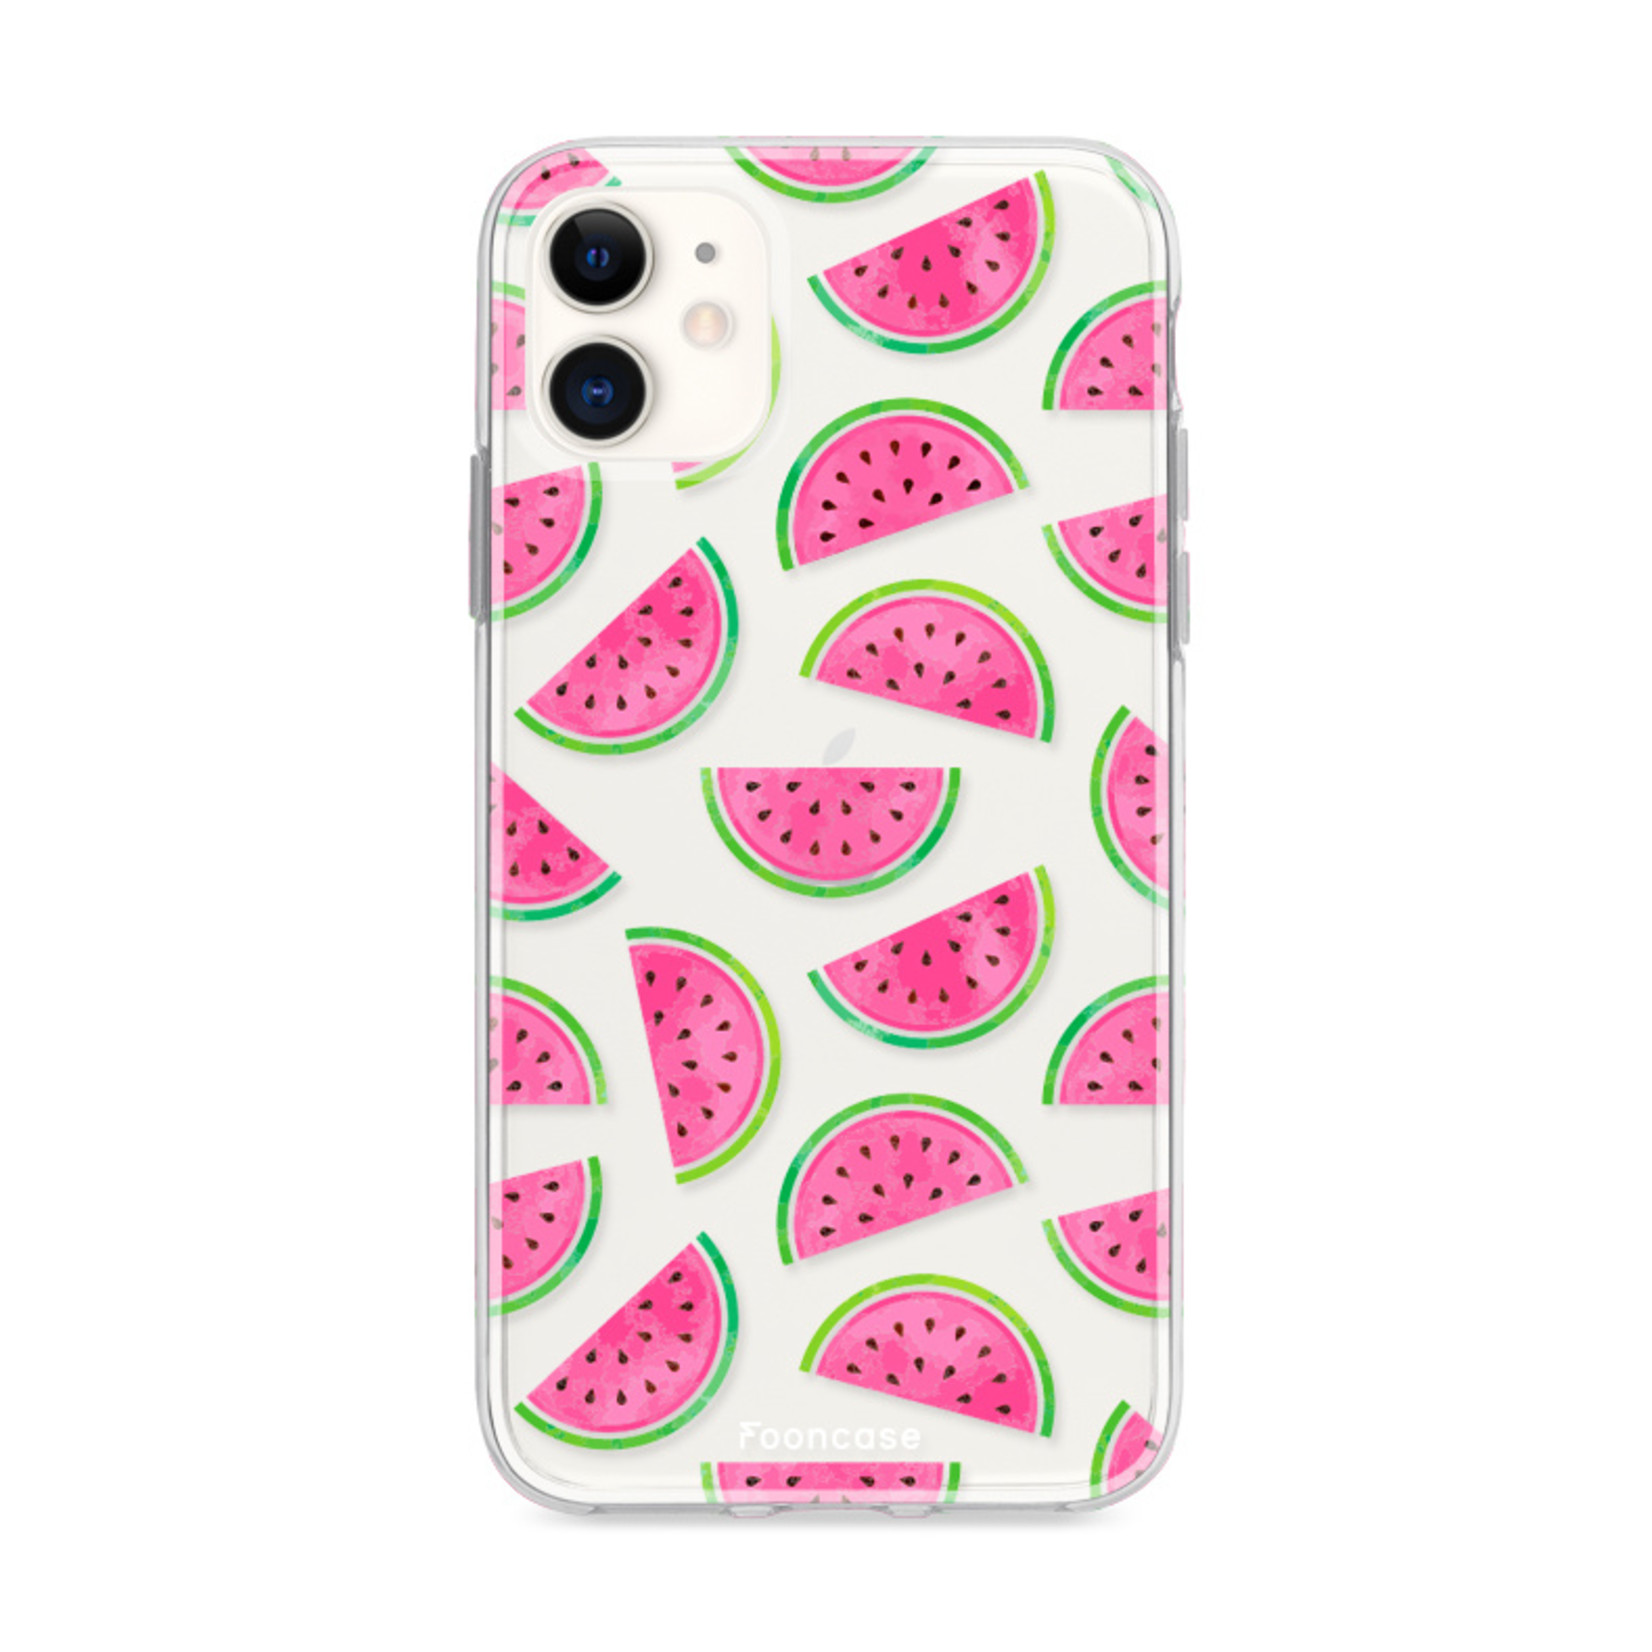 FOONCASE Iphone 12 Case - Watermelon